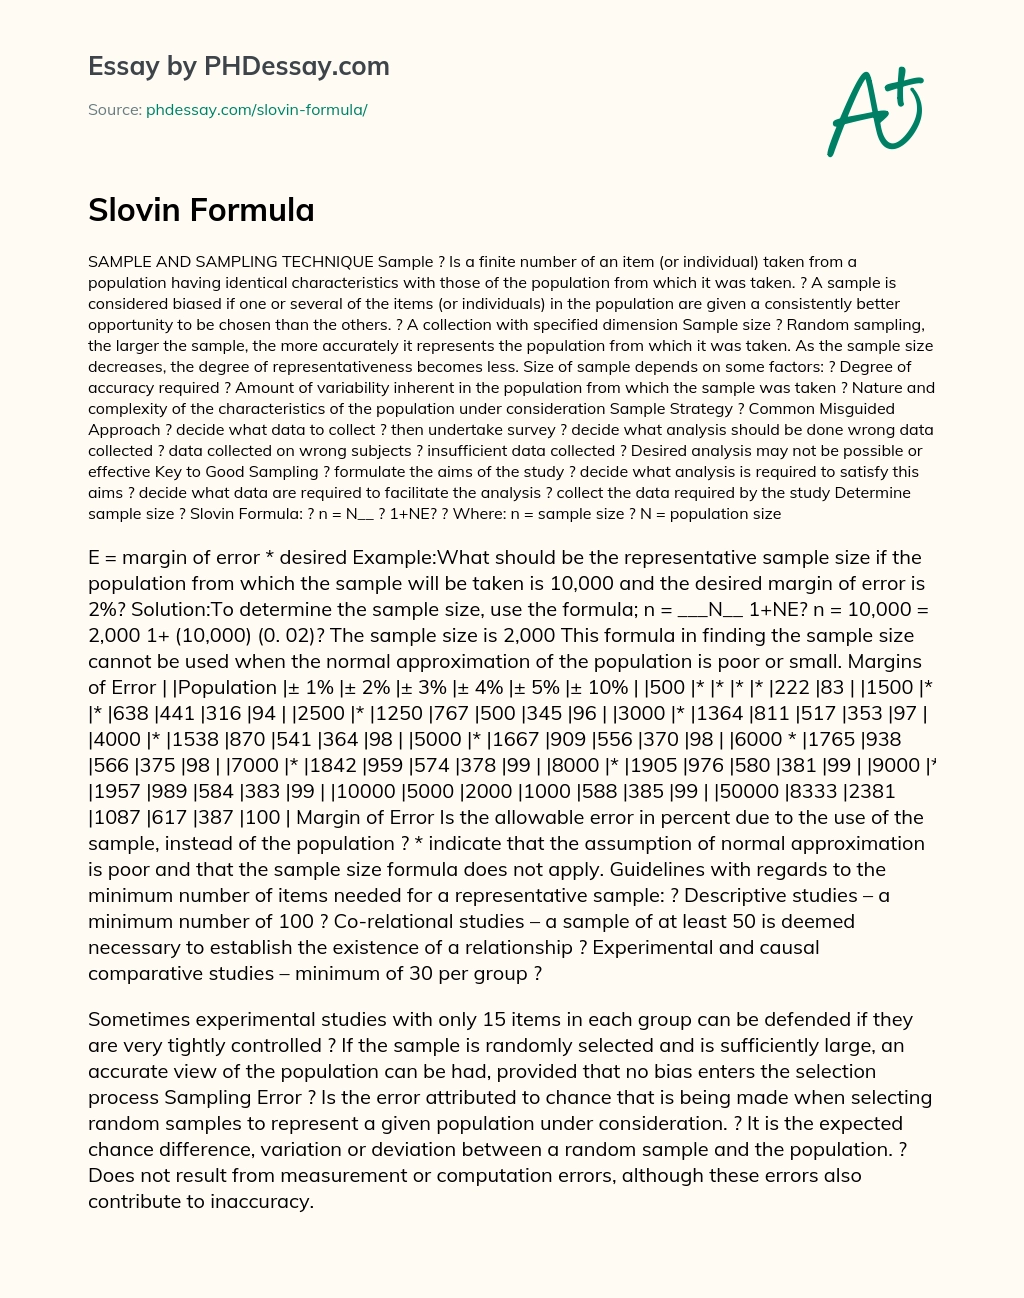 Slovin Formula essay